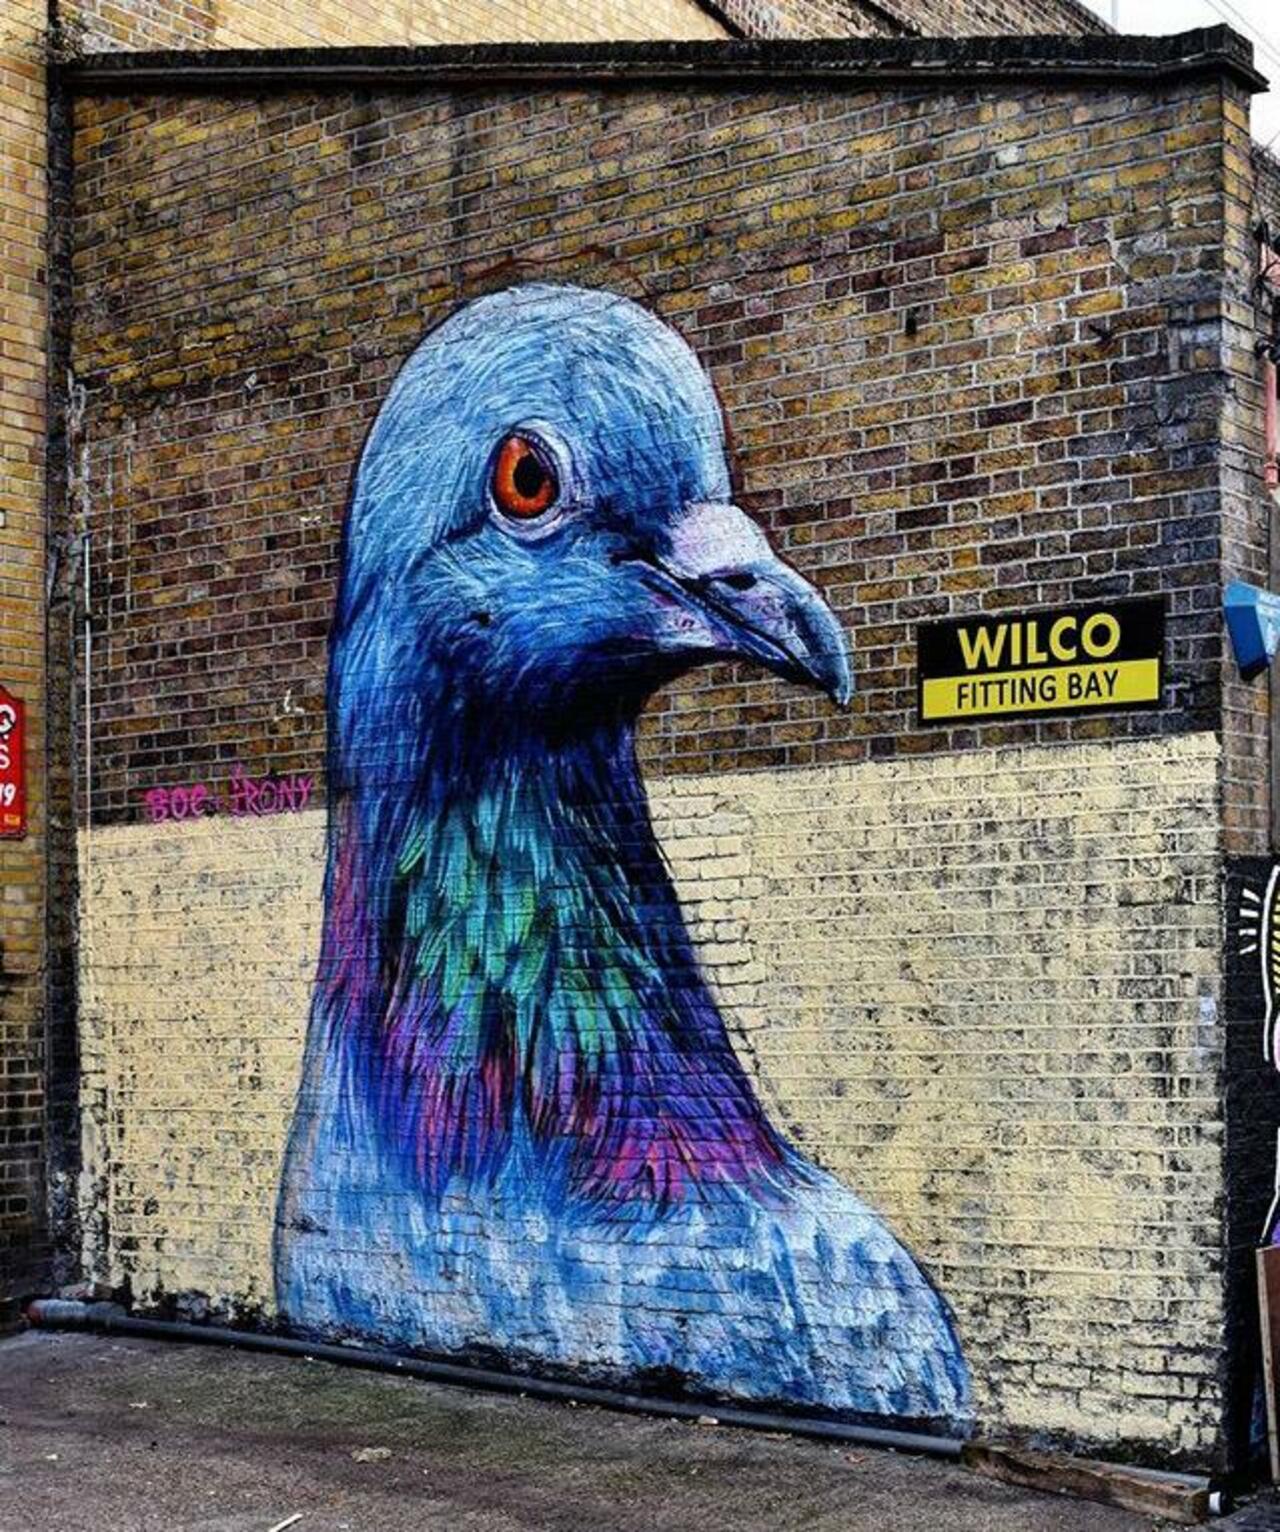 RT belilac "RT belilac "Street Art by Placee Boe & whoamirony in London 

#art #graffiti #mural #streetart http://t.co/eK1ICwxkP7""